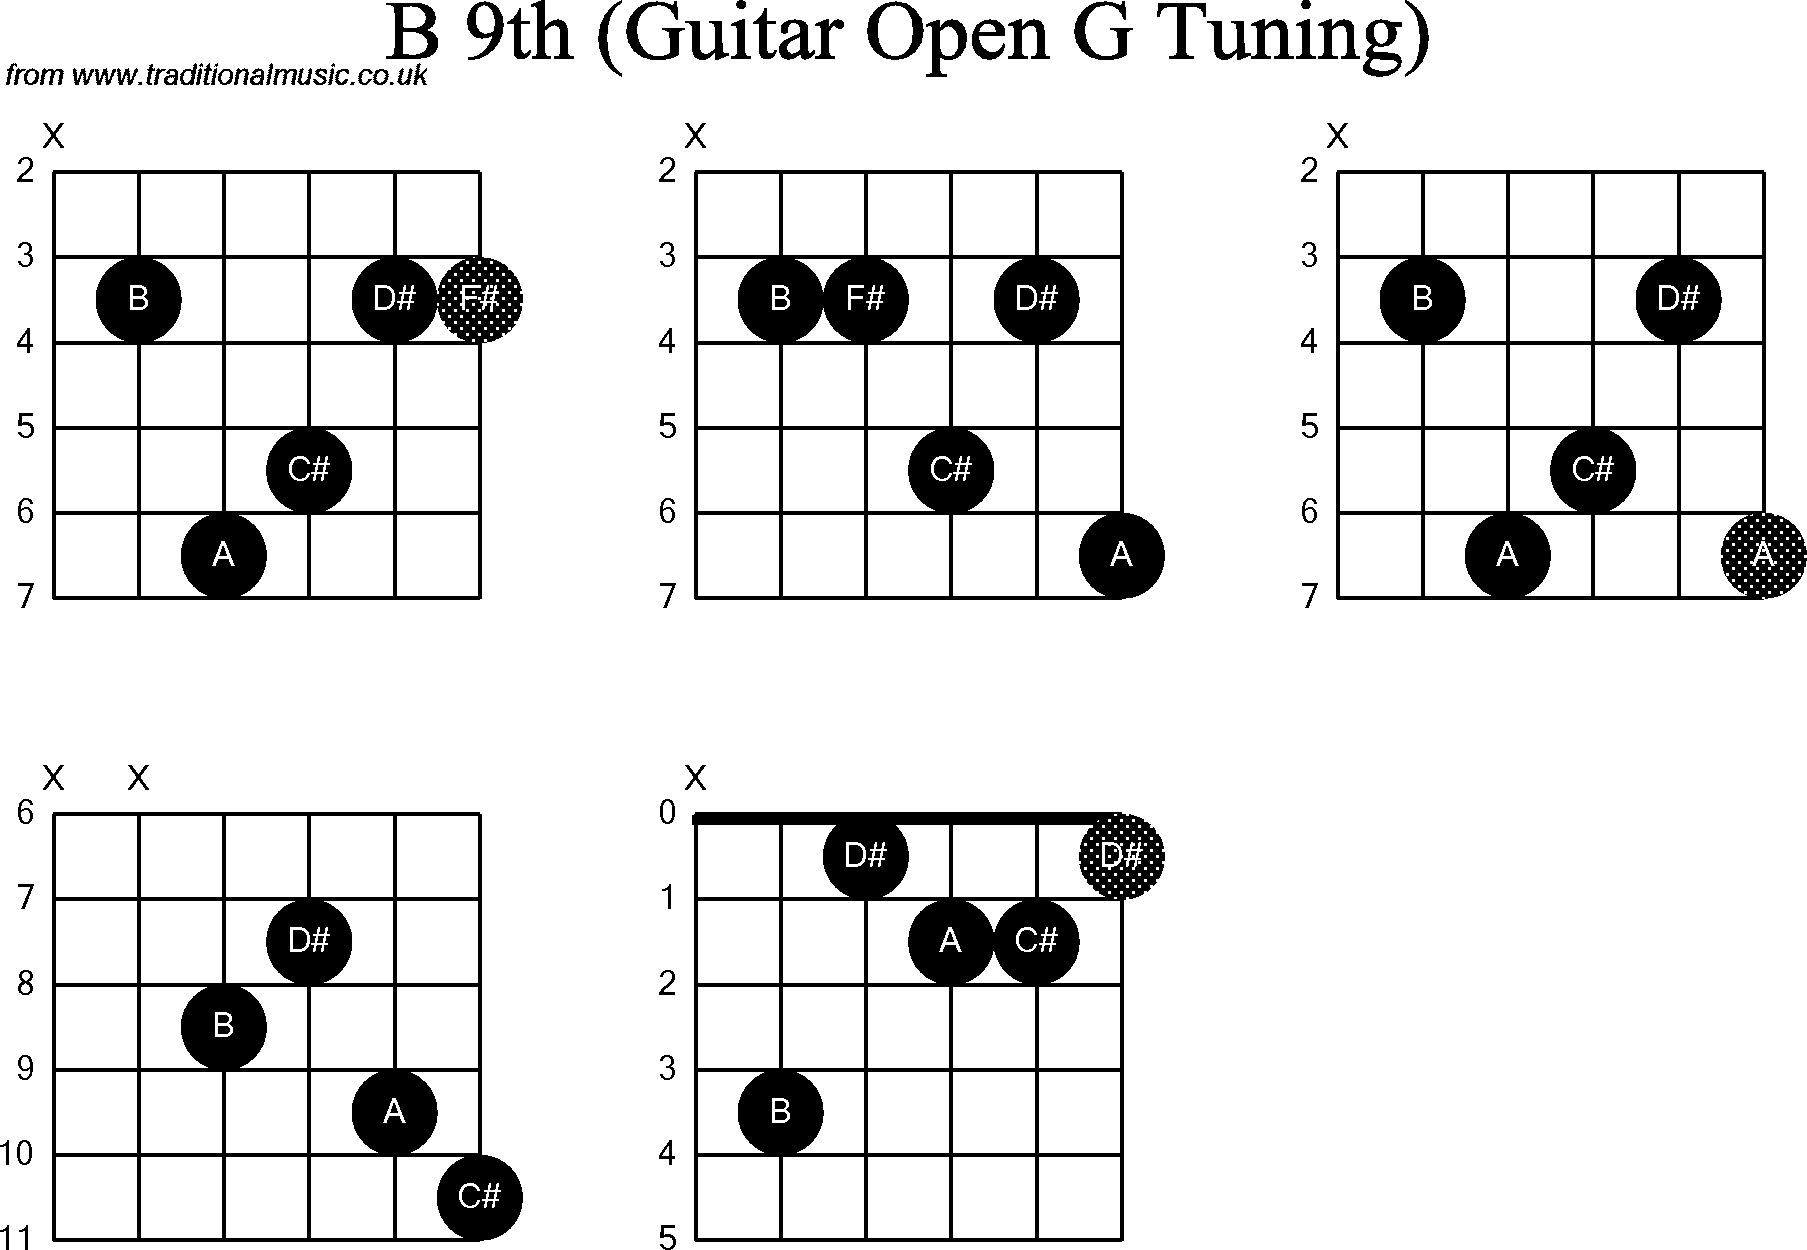 Chord diagrams for Dobro B9th